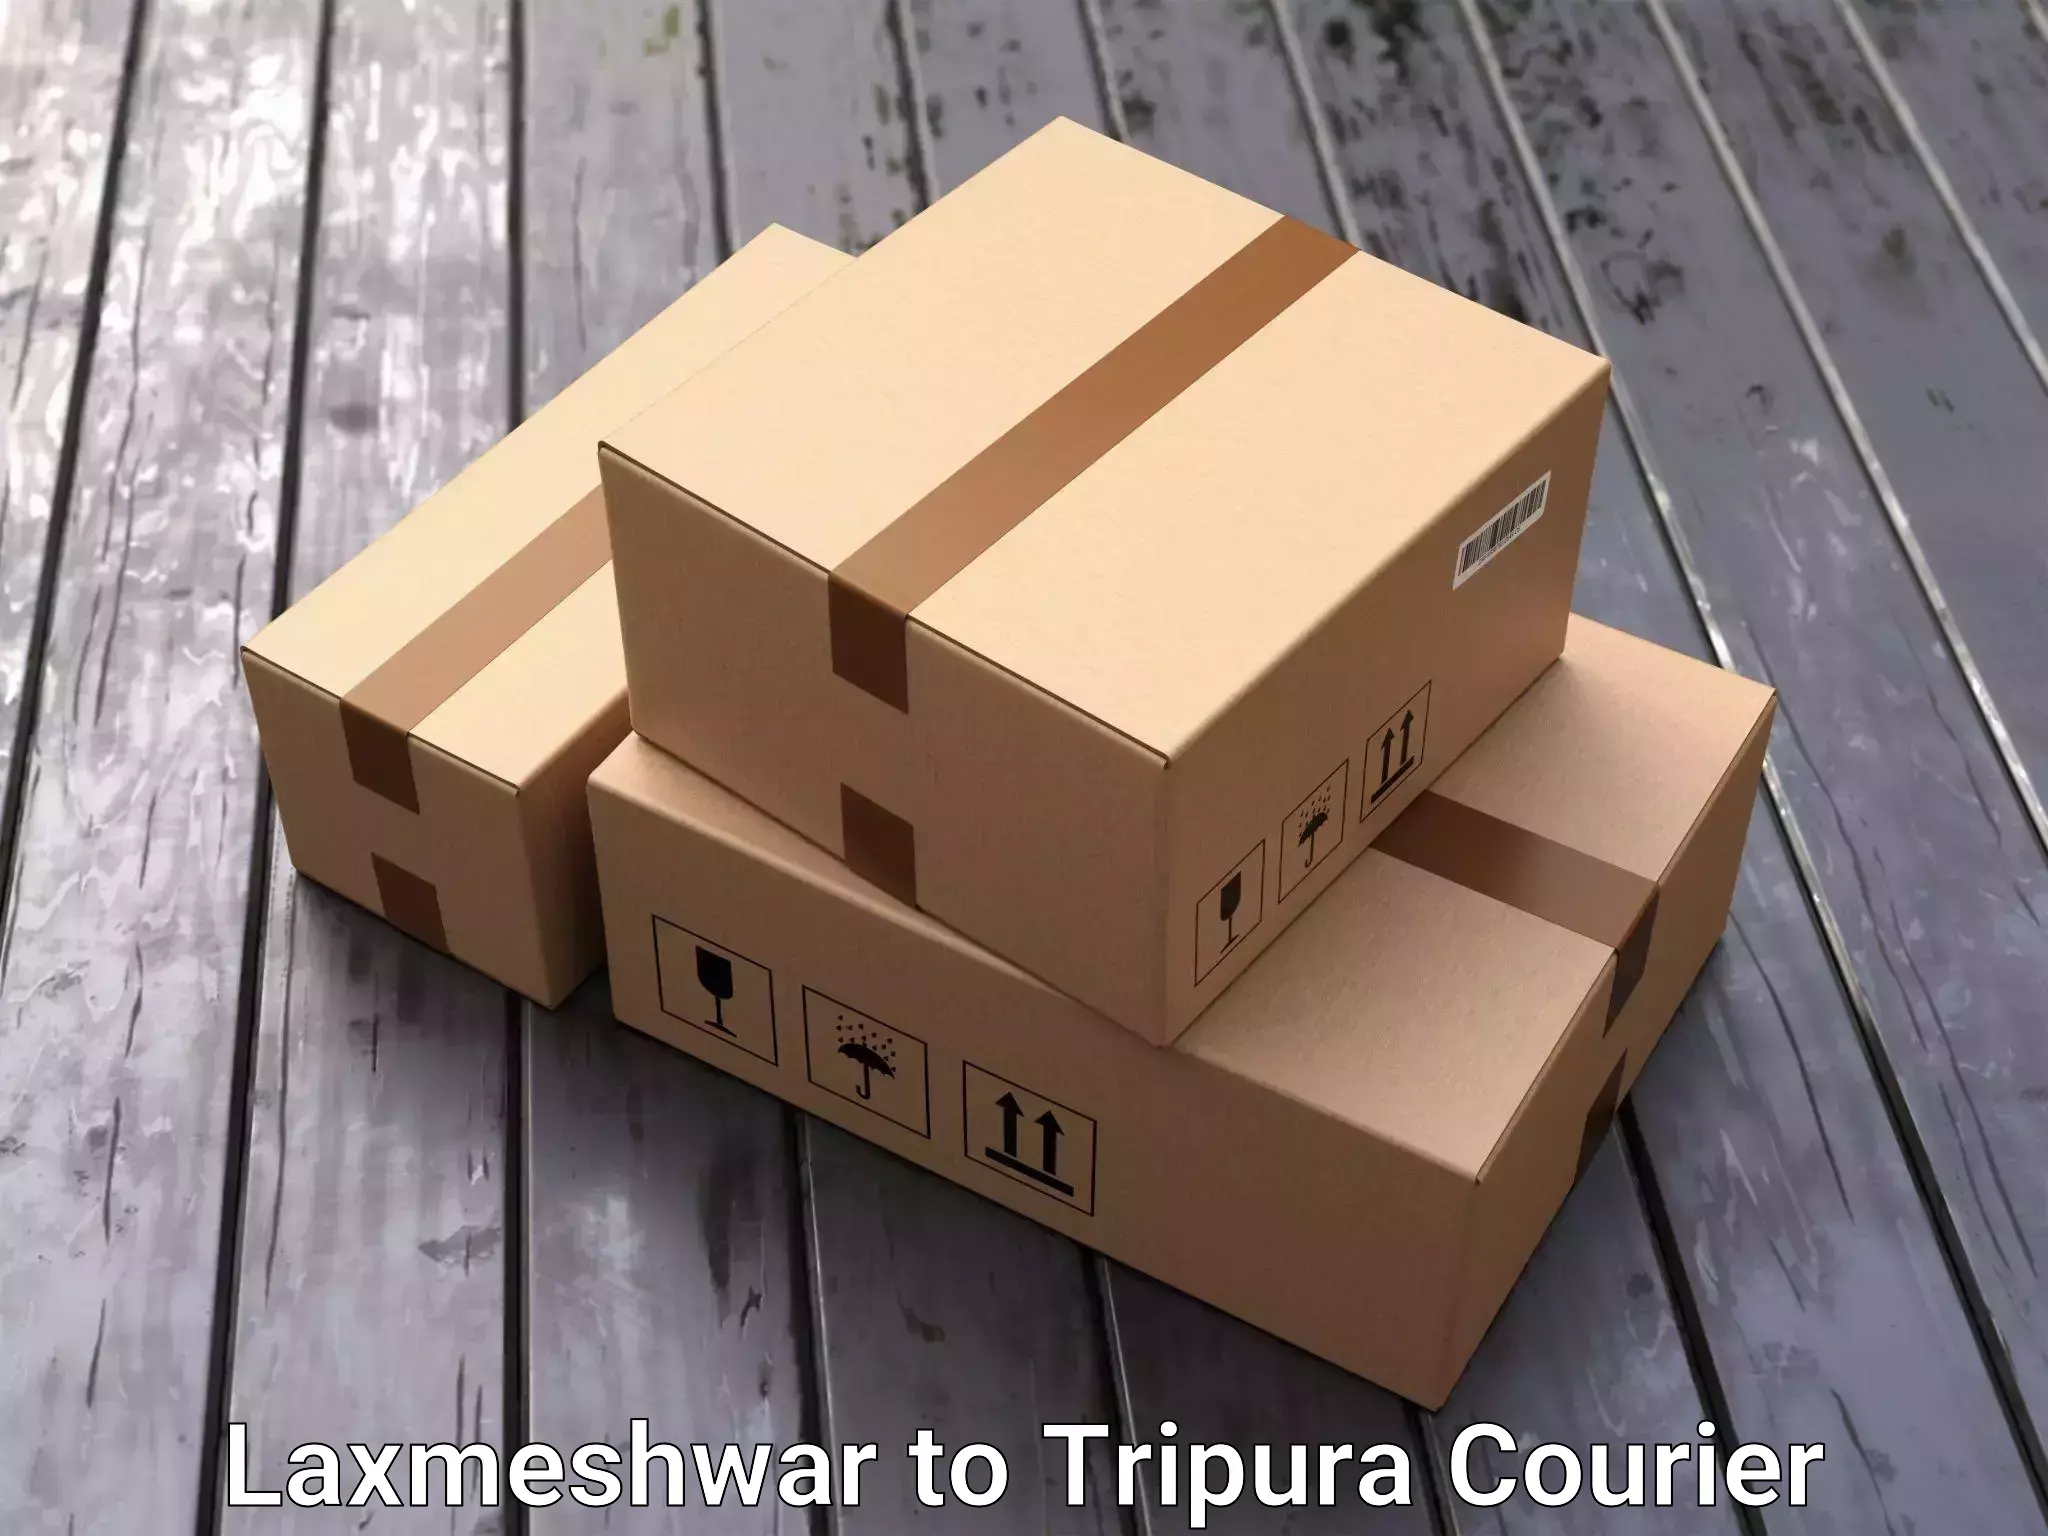 Professional furniture moving in Laxmeshwar to Tripura